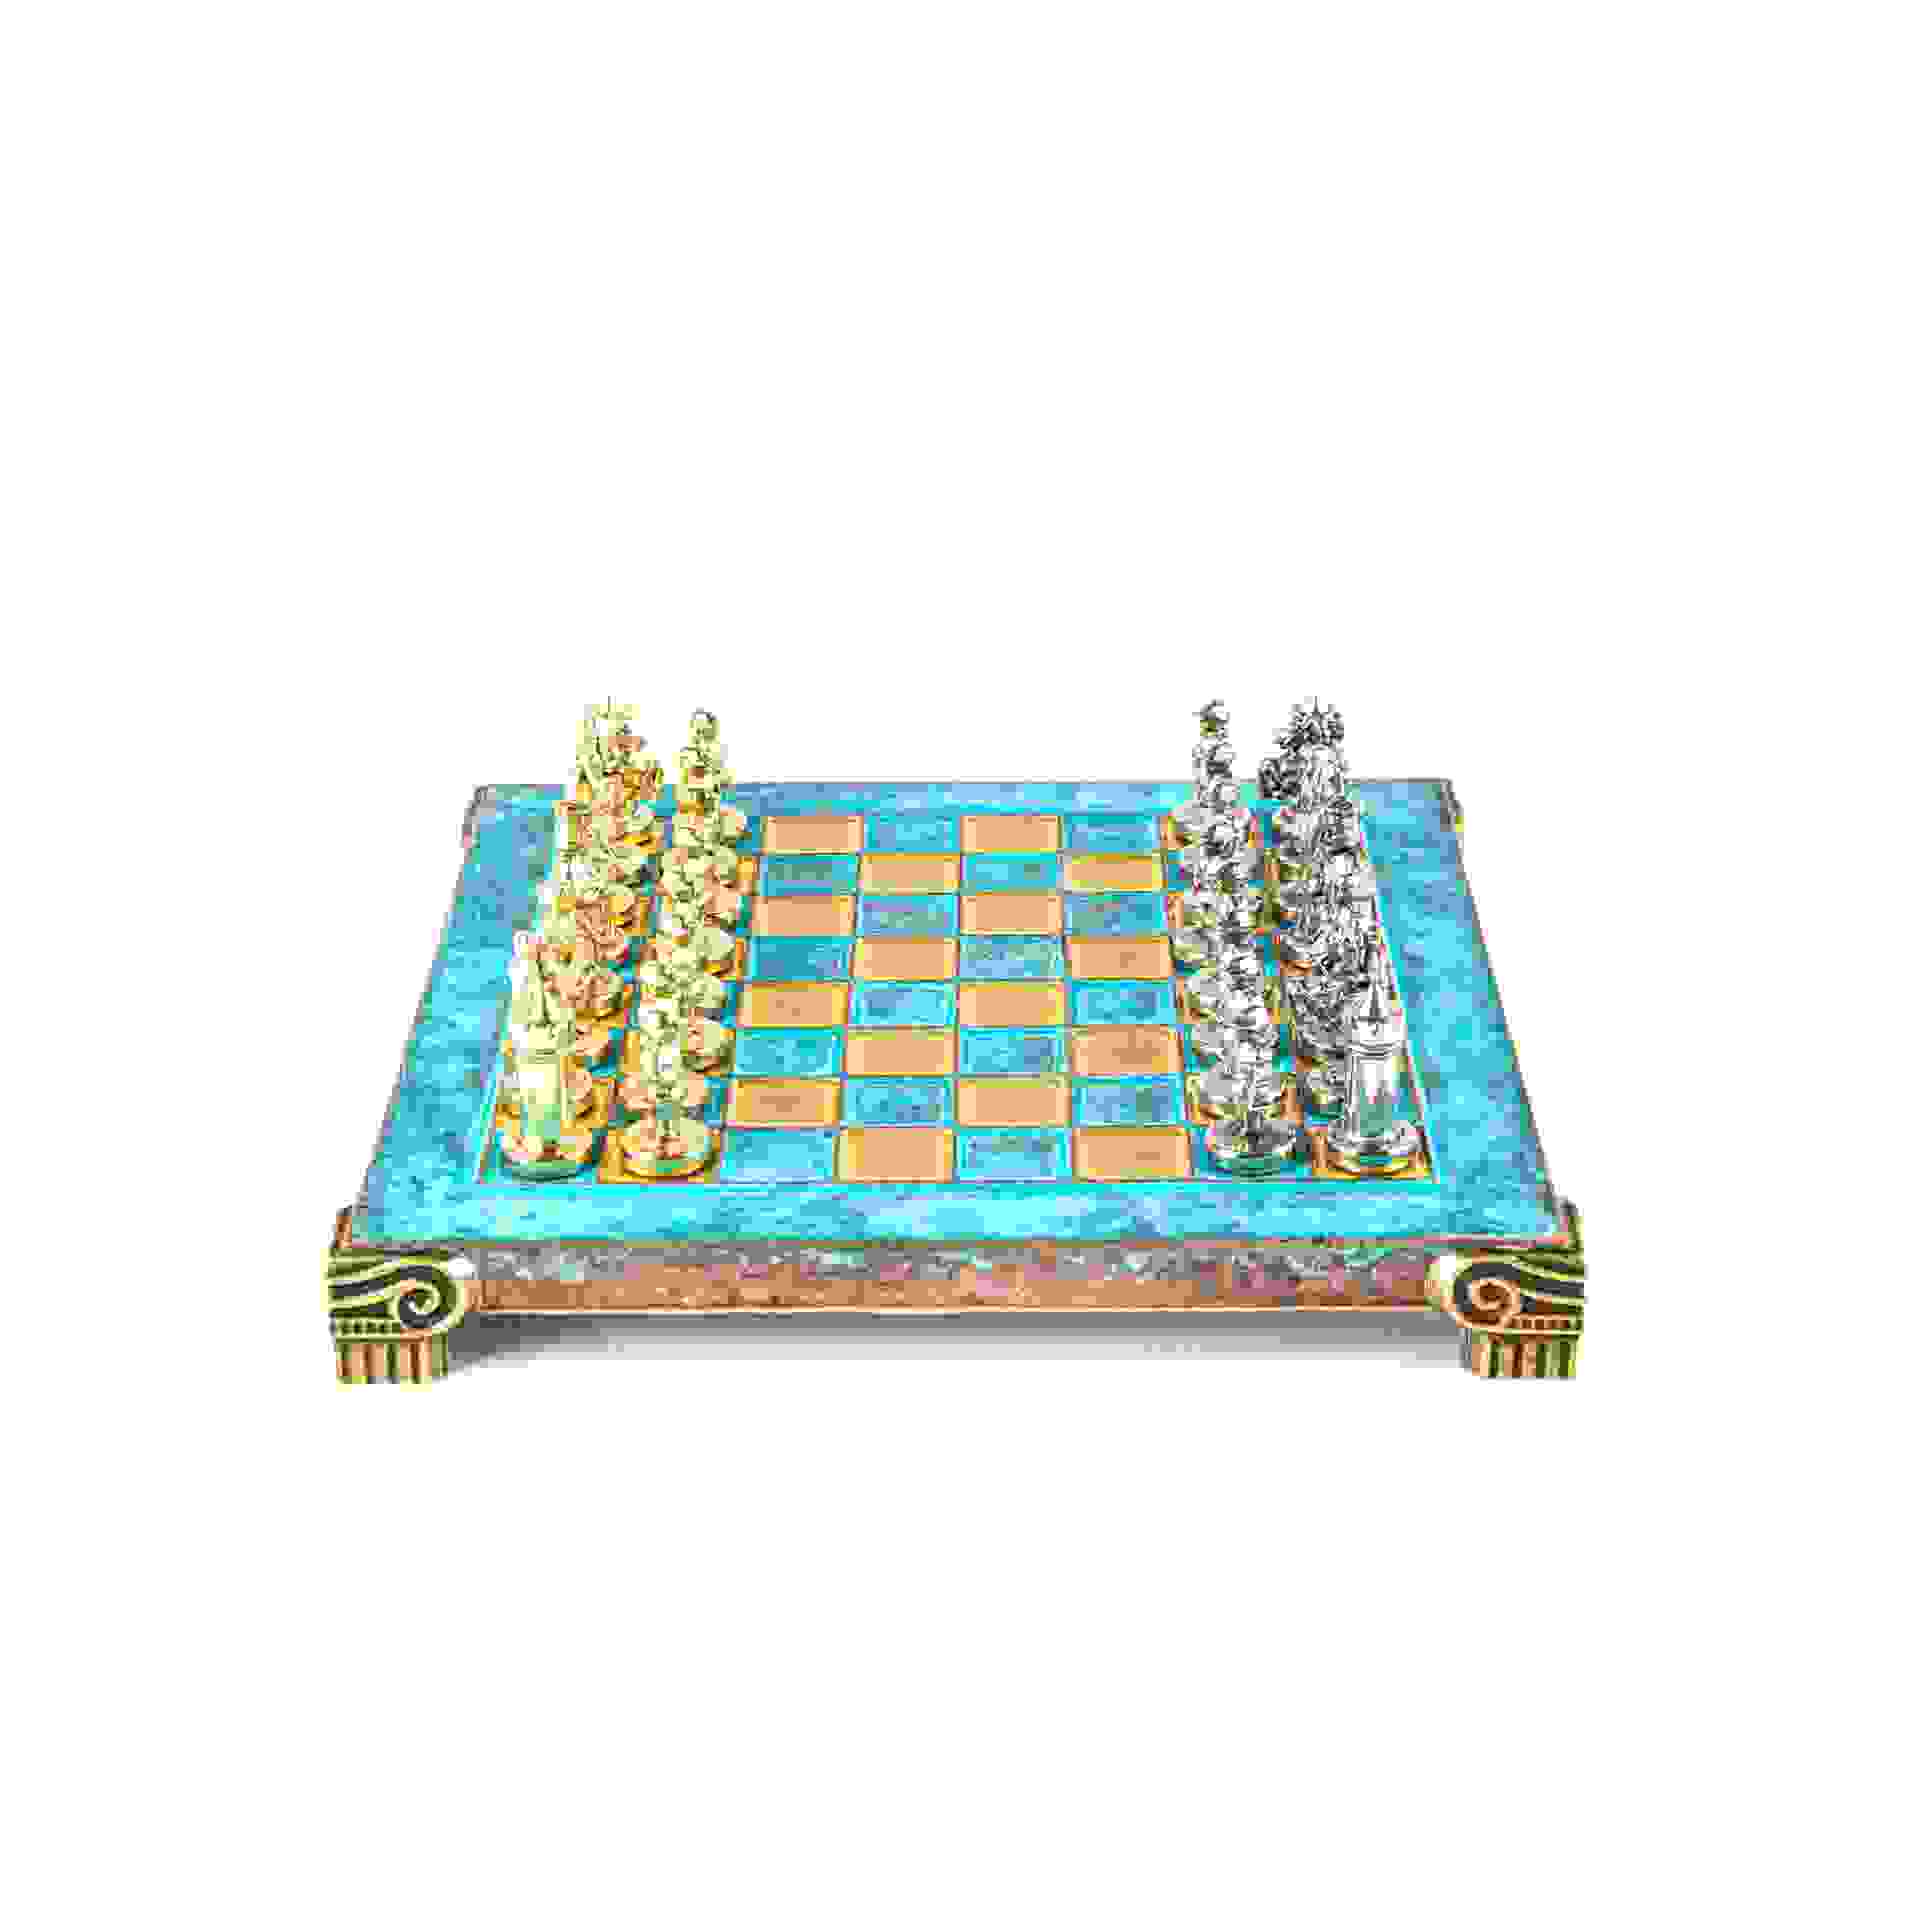 Byzantine Metal Chess Set 20x20cm Antique Turquoise Patina